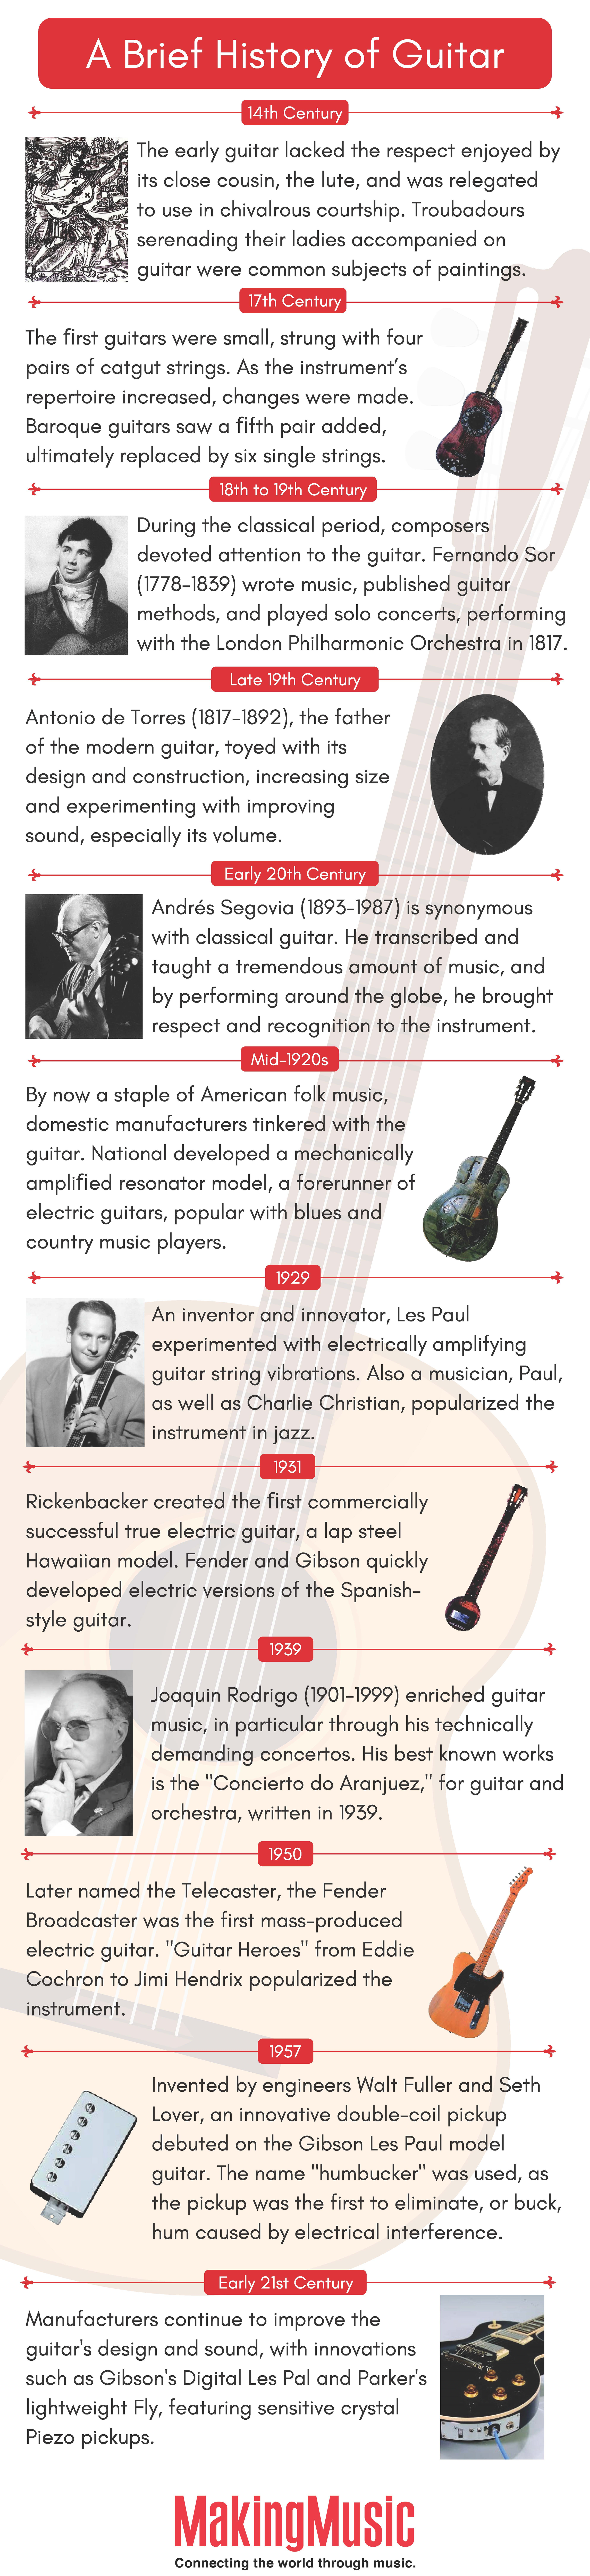 history of guitar